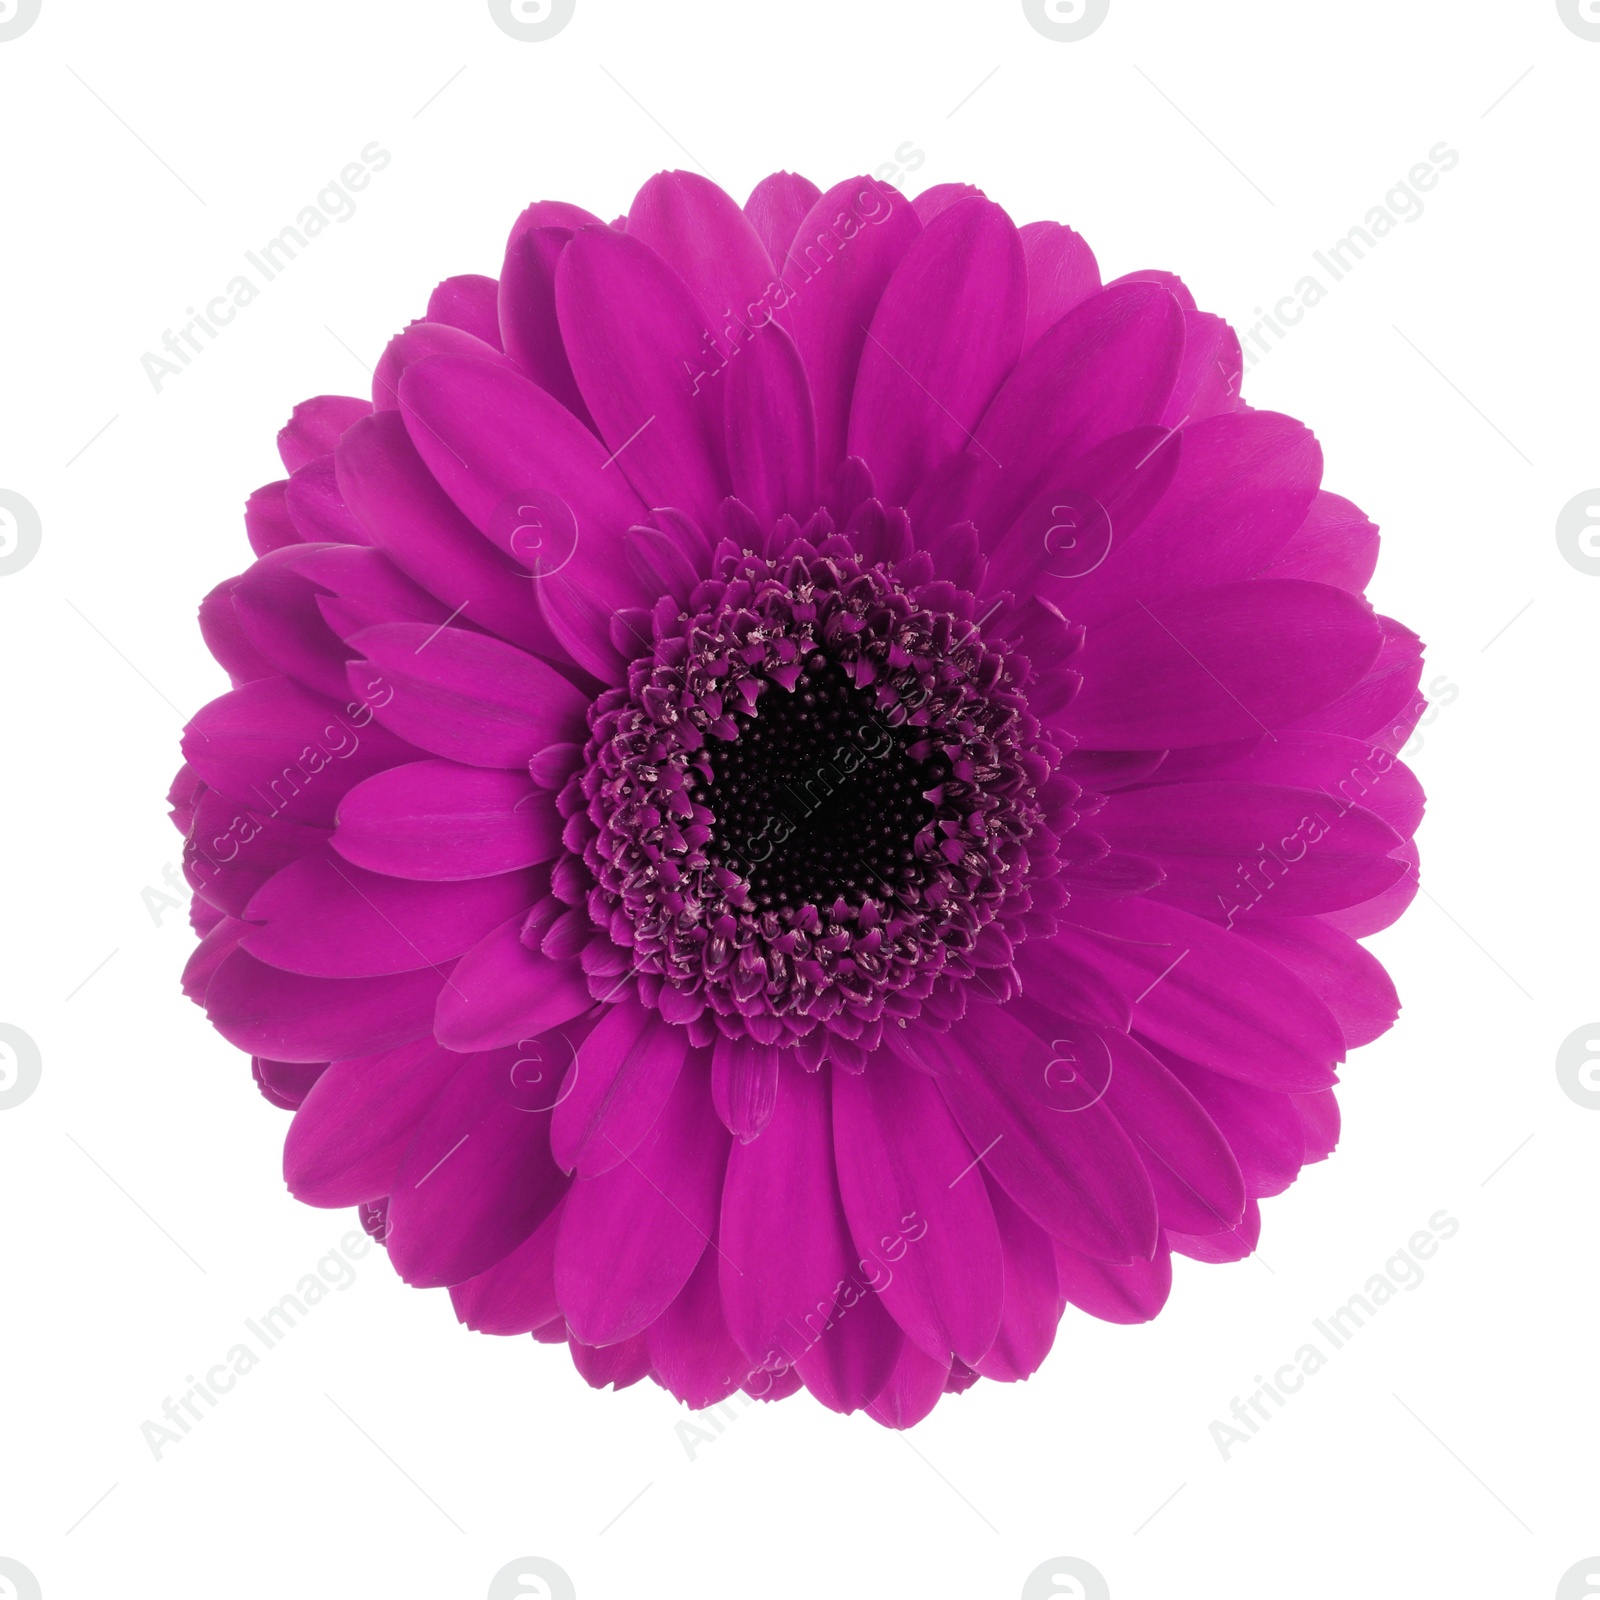 Image of Beautiful purple gerbera flower on white background